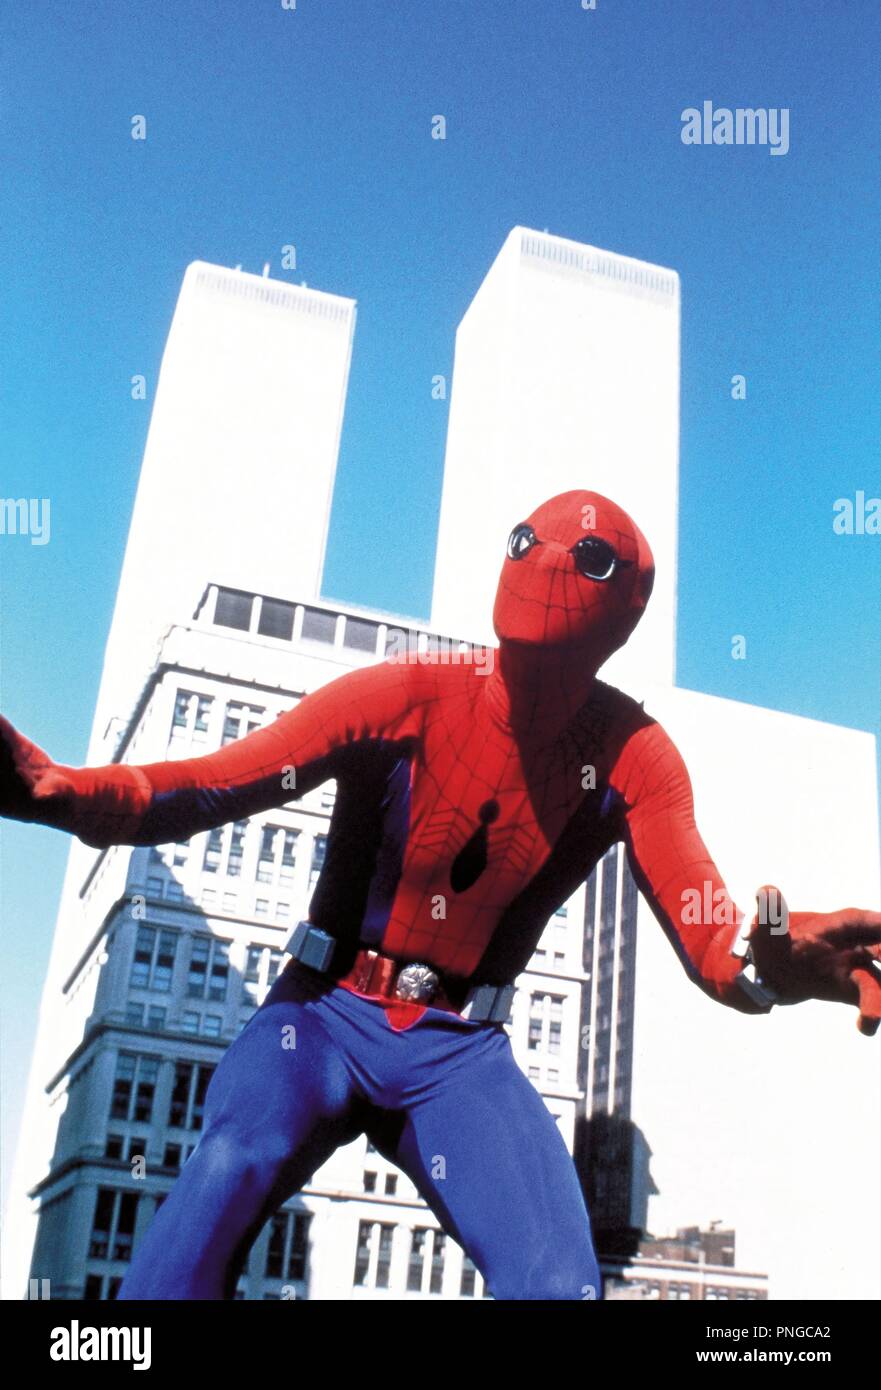 Vintage Movie Poster Columbias Spider Man 1977 Starring Nicolas Hammond and  David White - Rare Collectibles TV